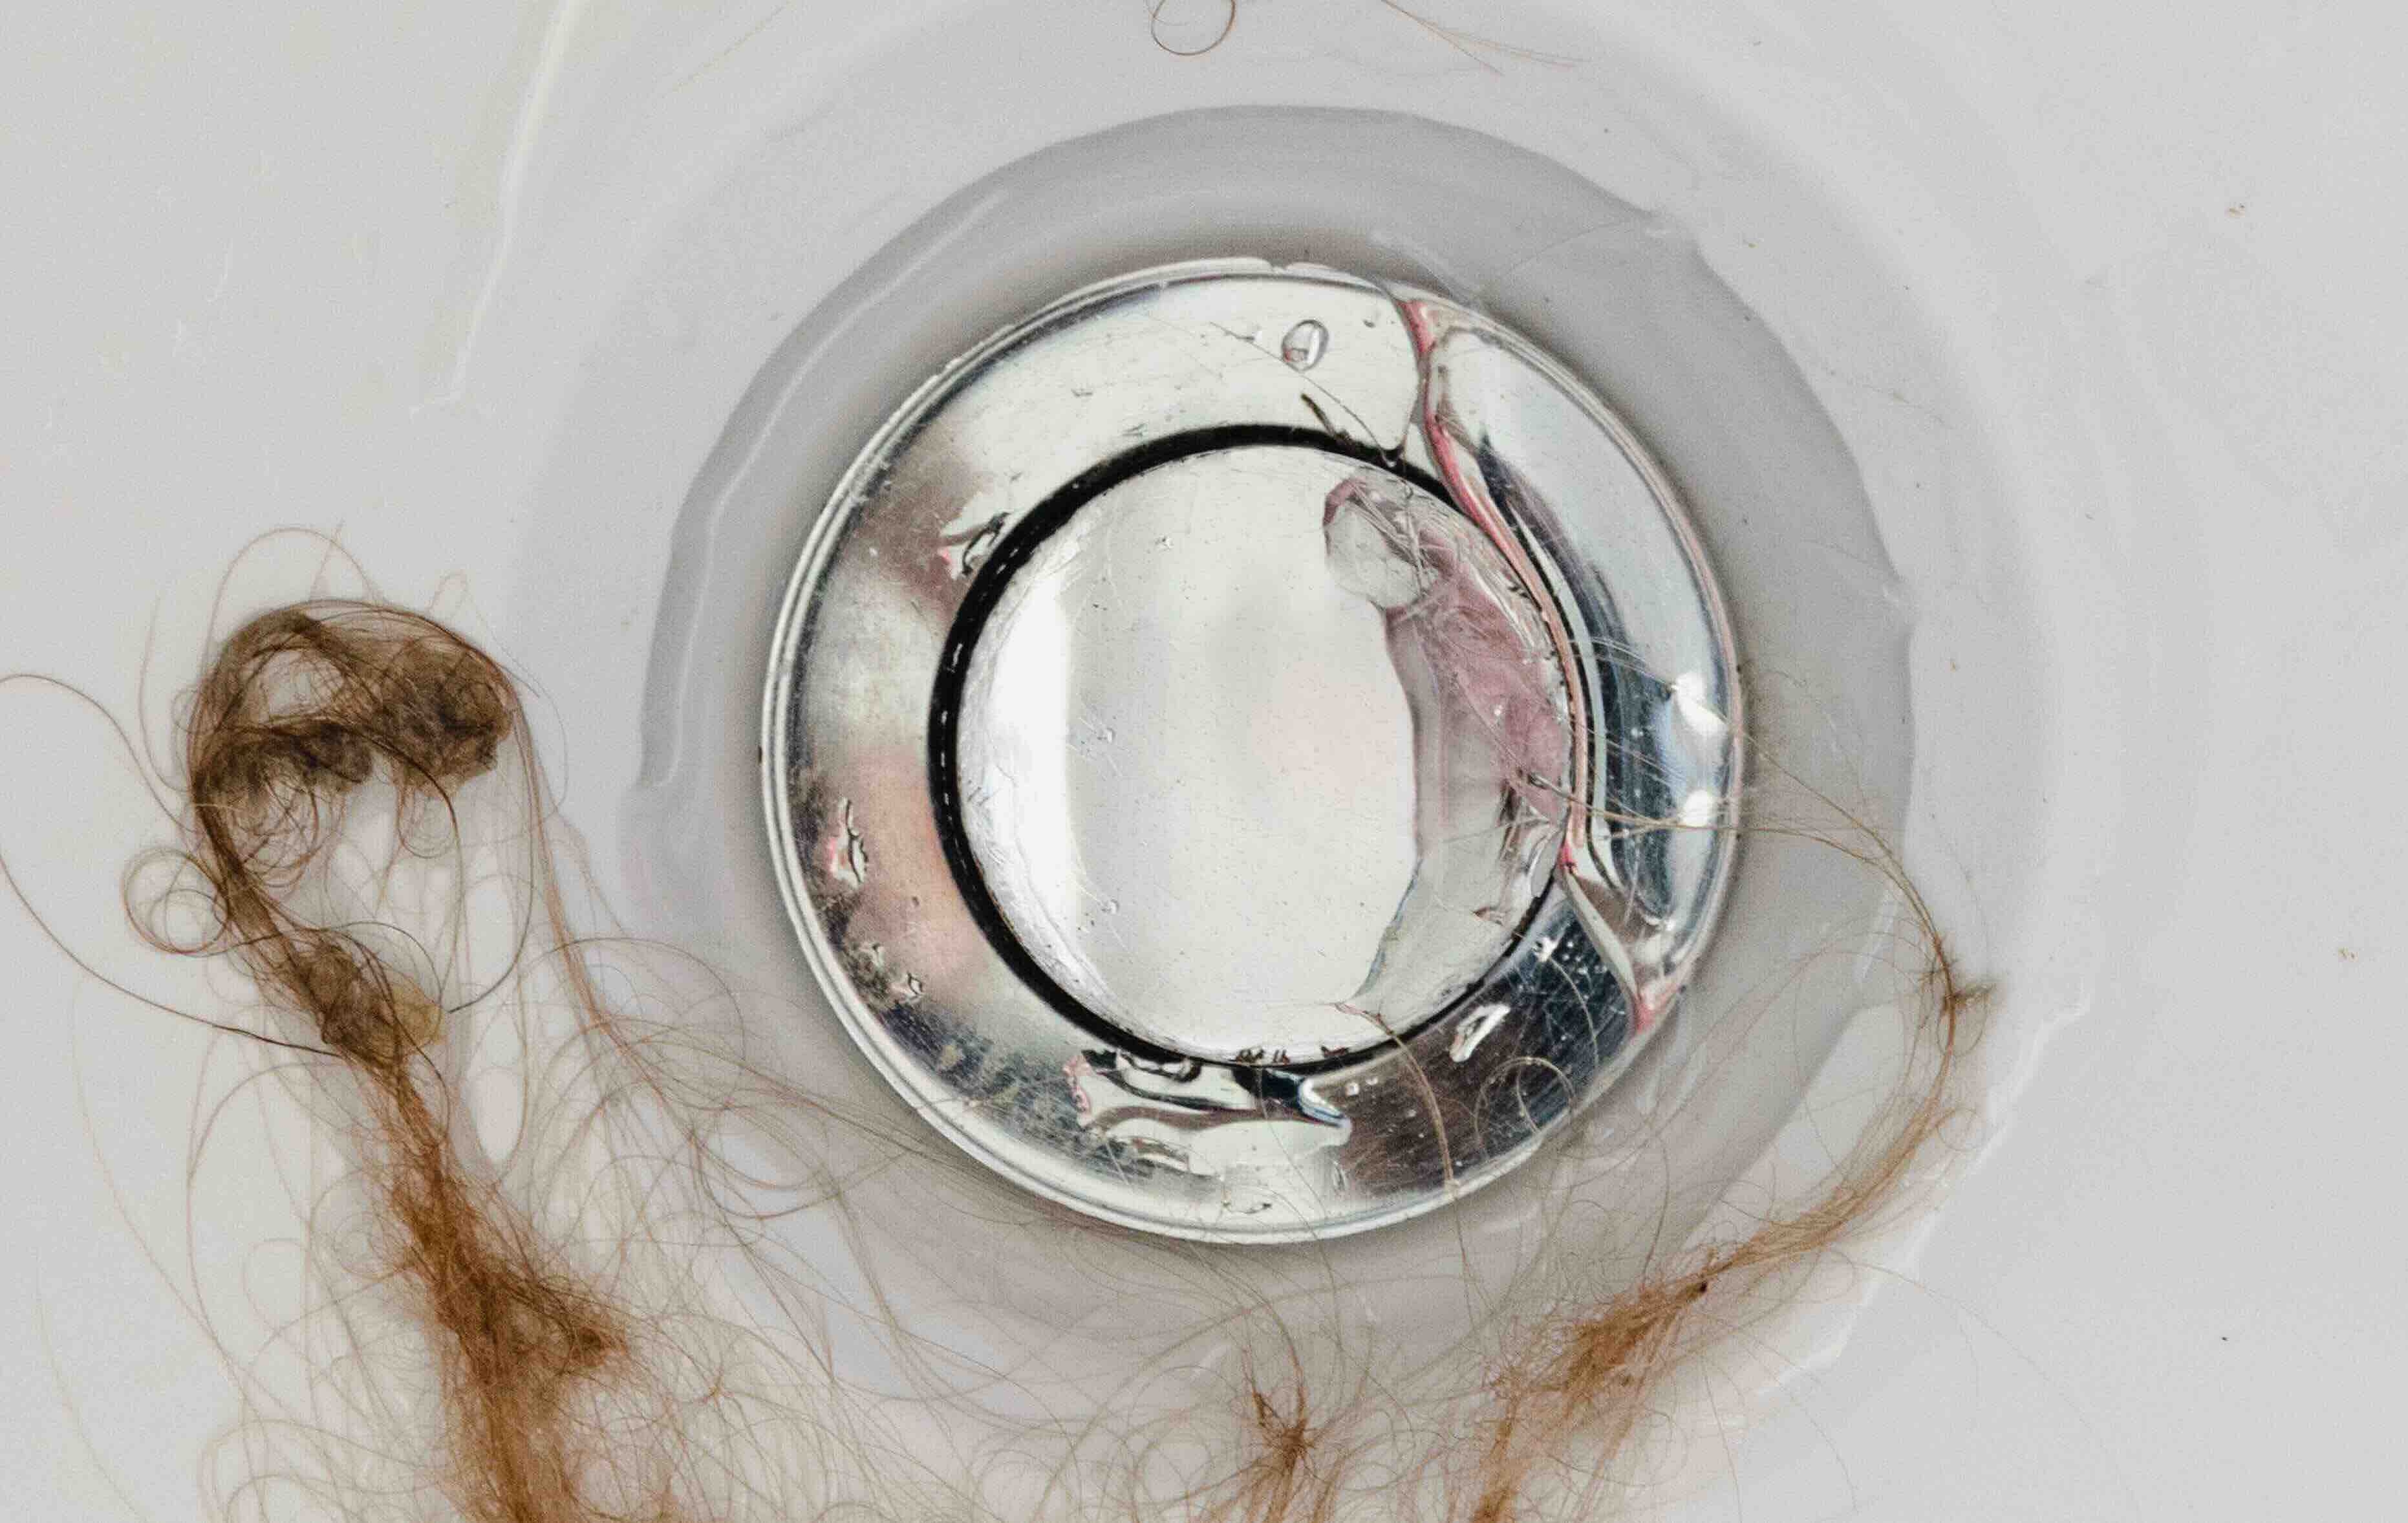 How To Clear A Bathtub Drain Clogged With Hair